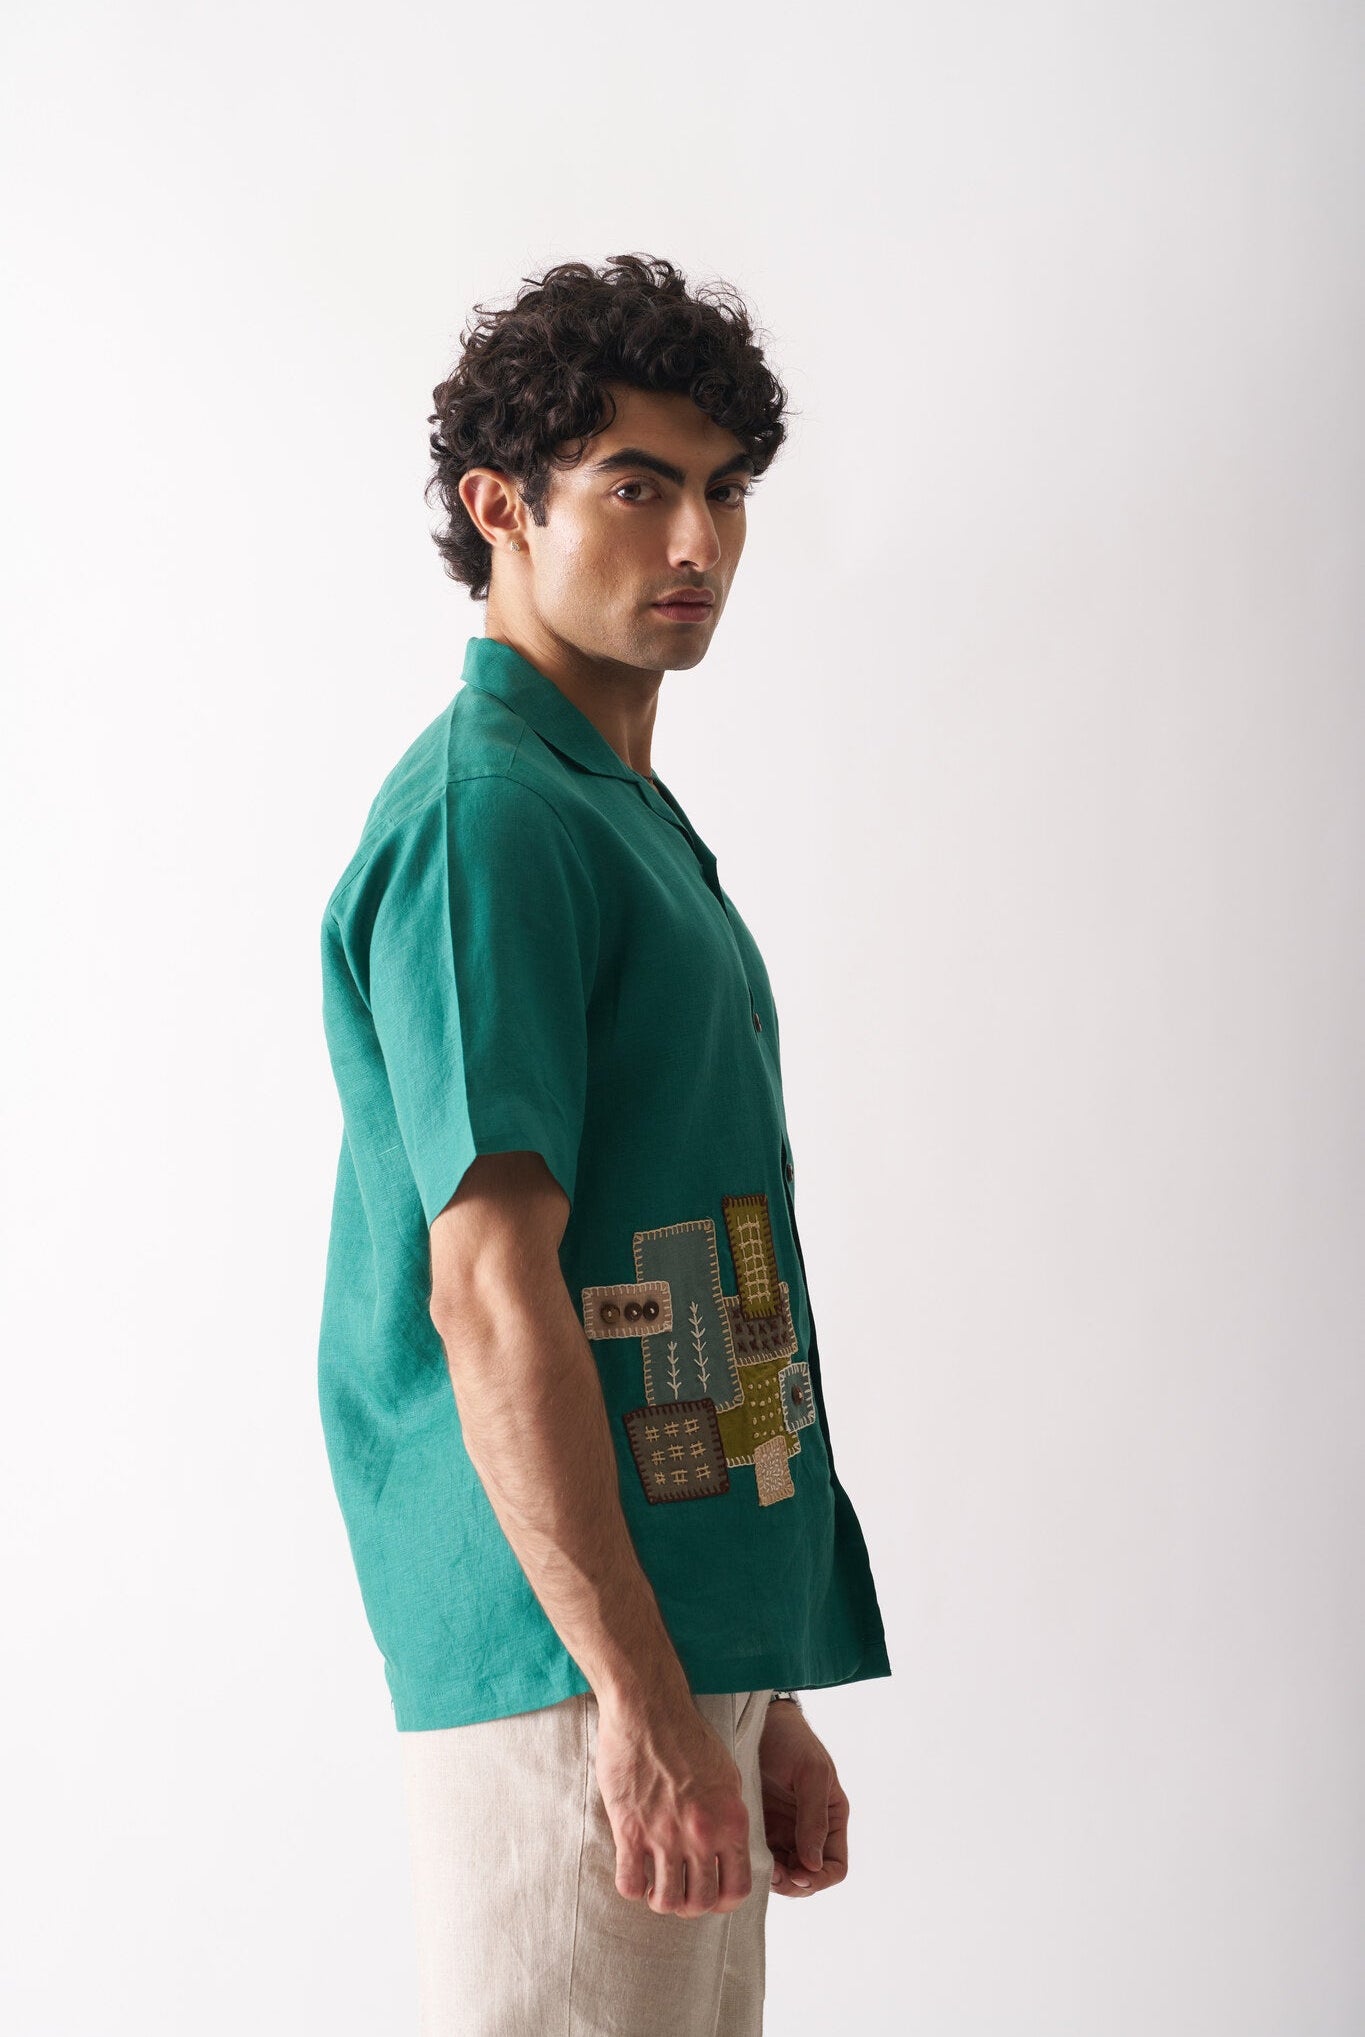 Mens Hand Embroidered Pure Linen Shirt - That Green Applique Shirt - CiceroniShirtCultura Studio